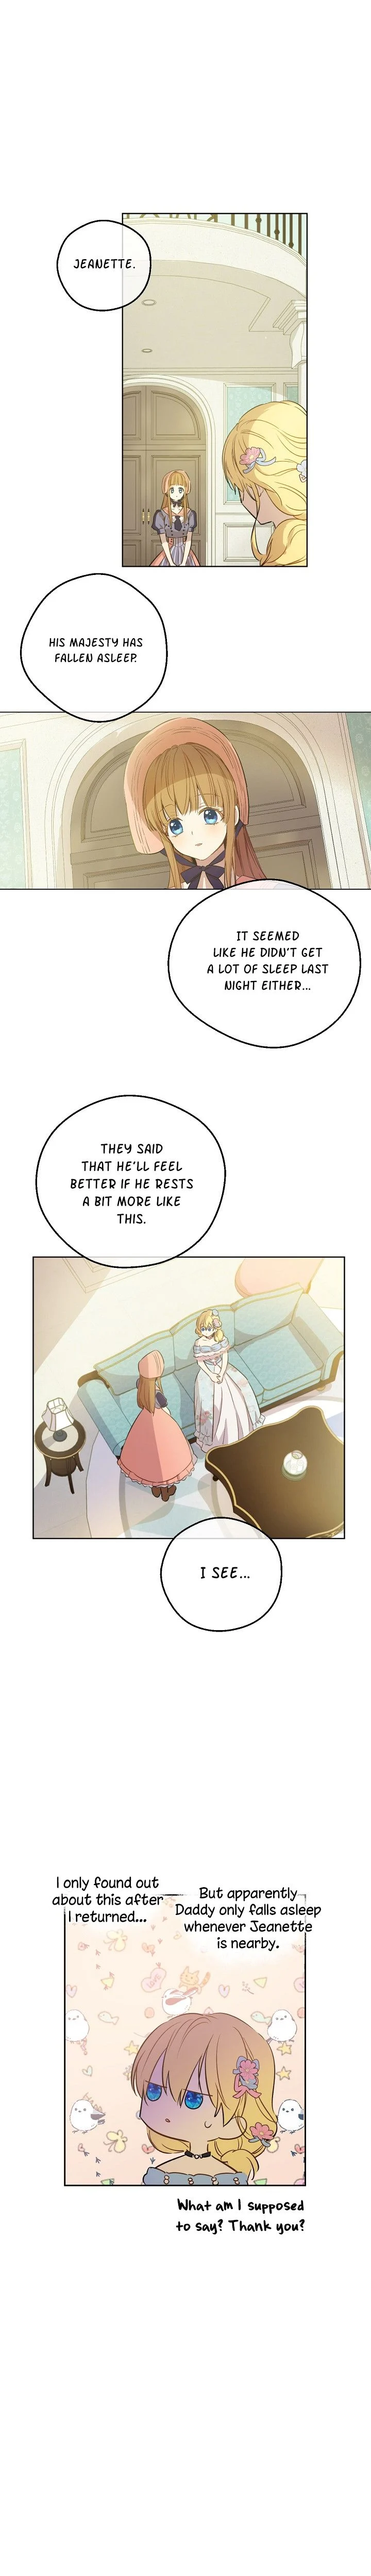 Who Made me a Princess Chapter 69 - Page 1